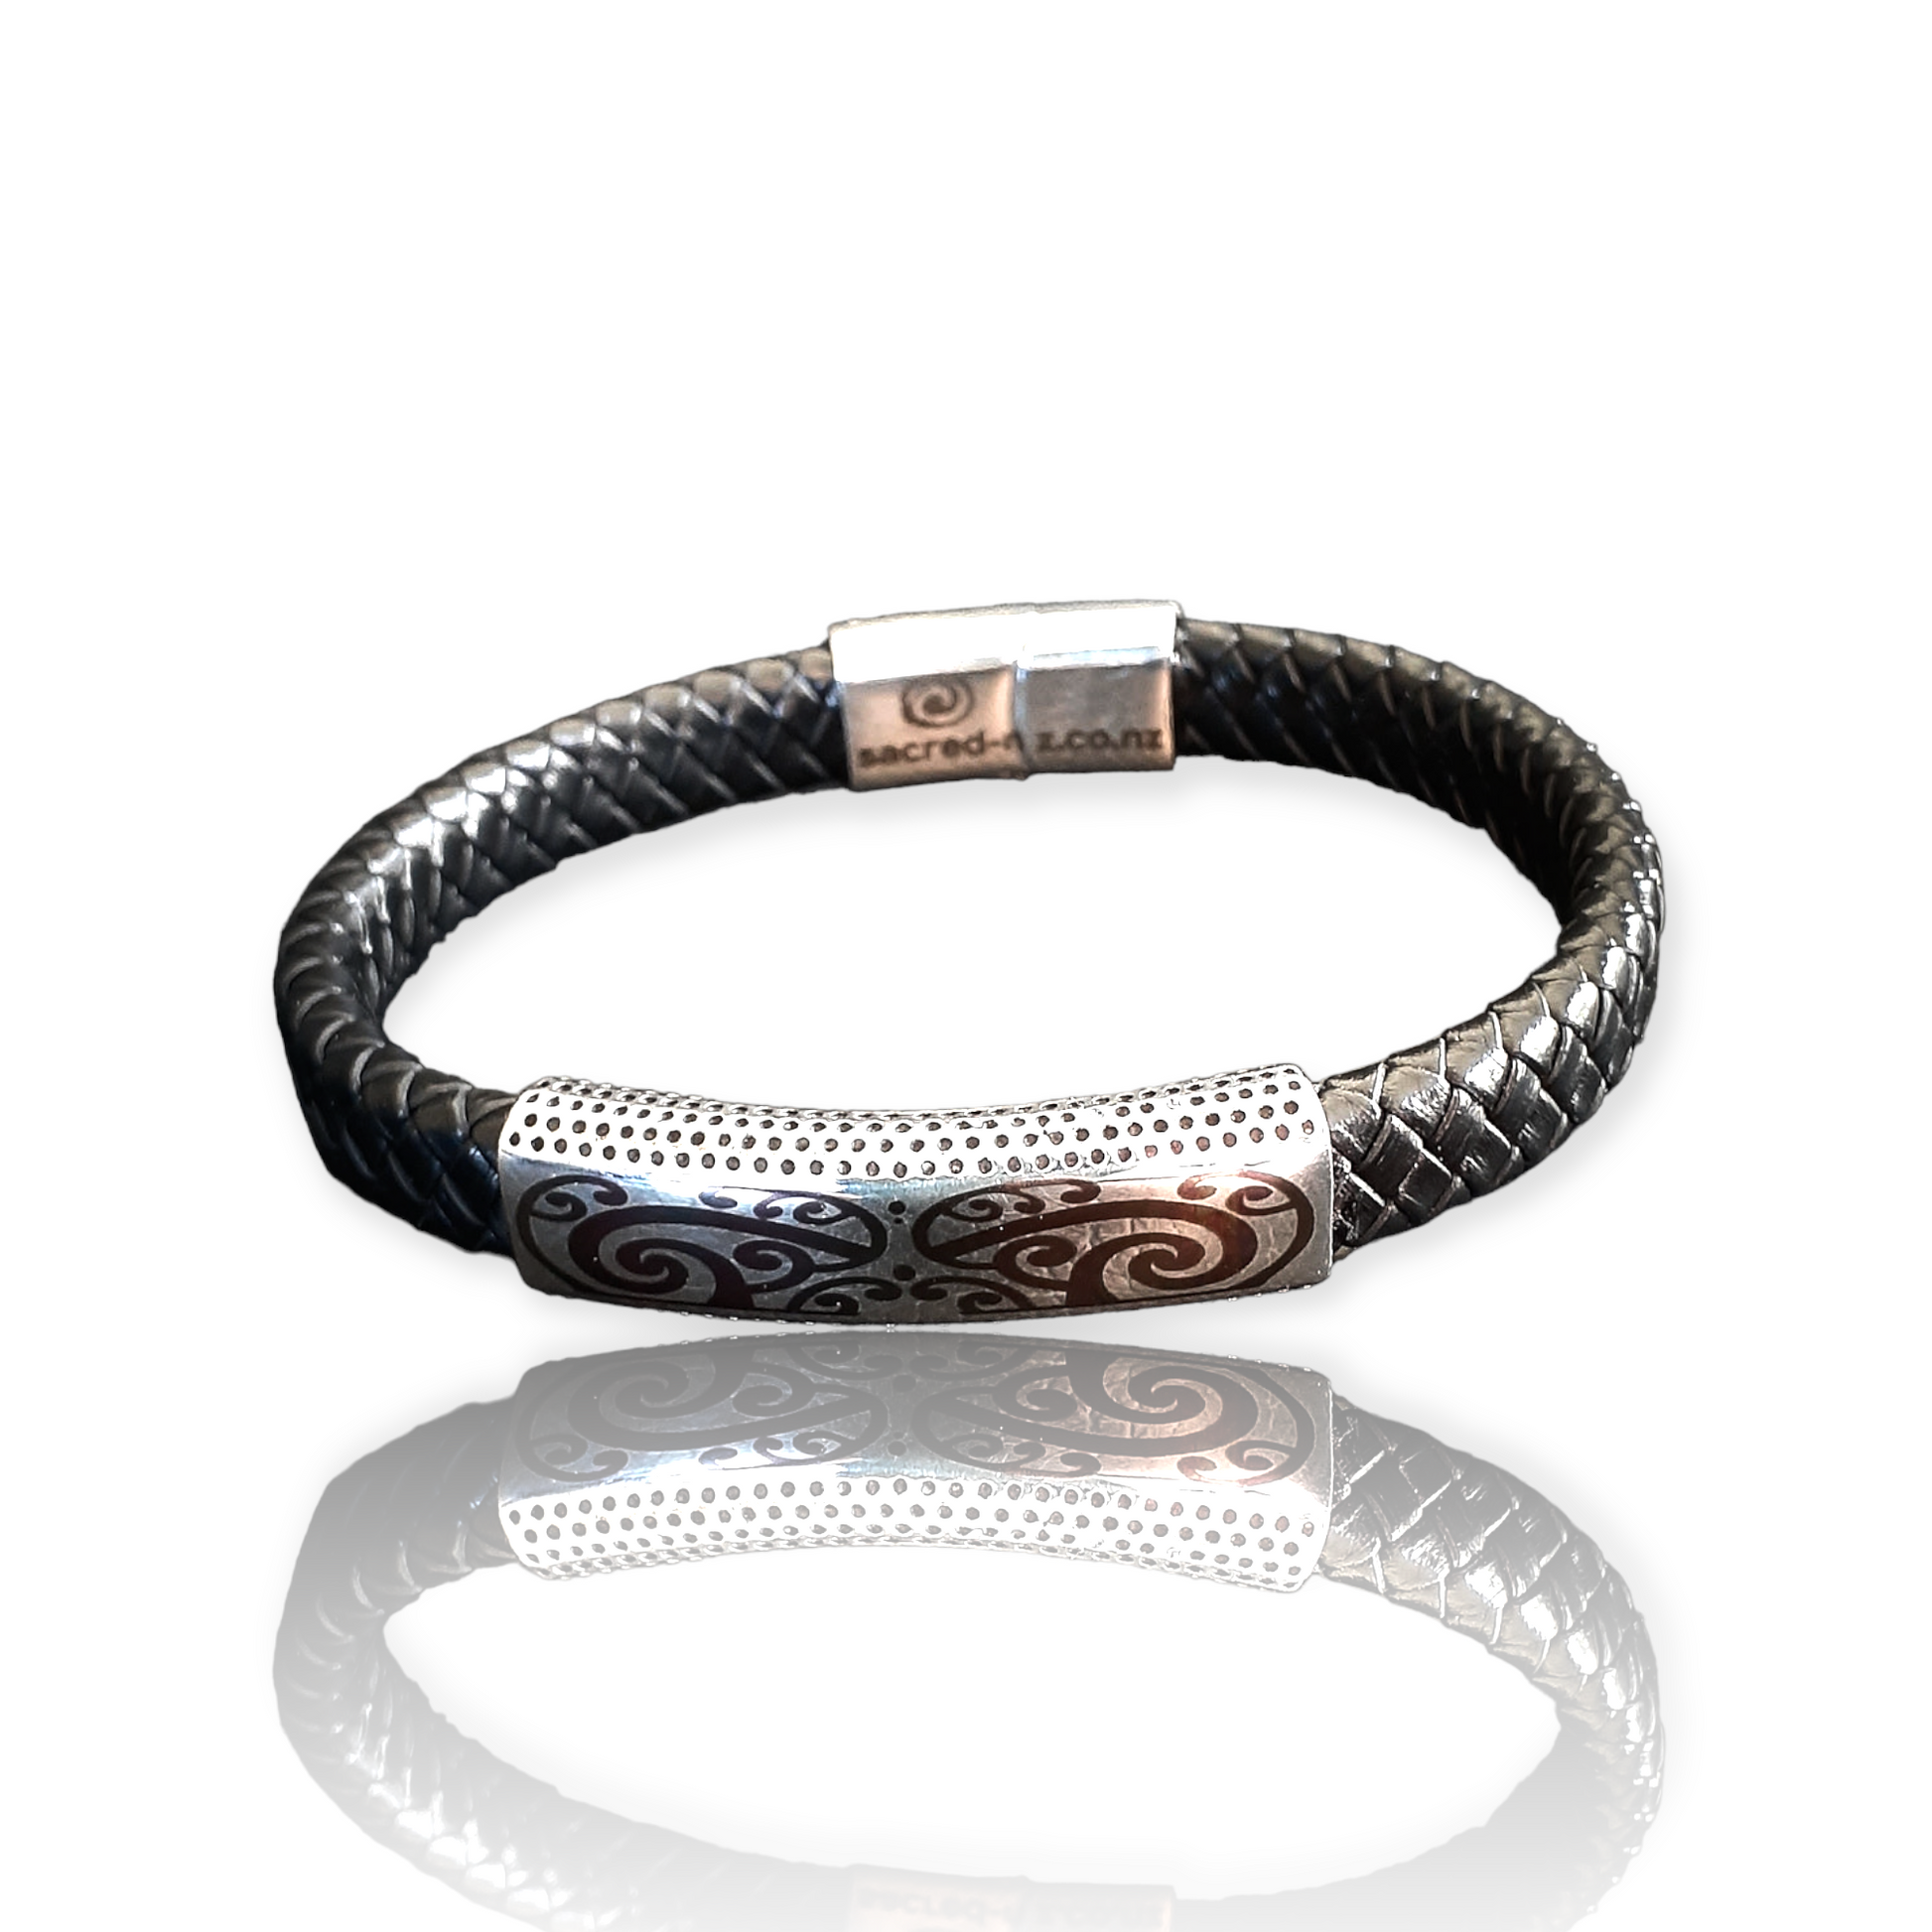 NZ unisex leather bracelet maori